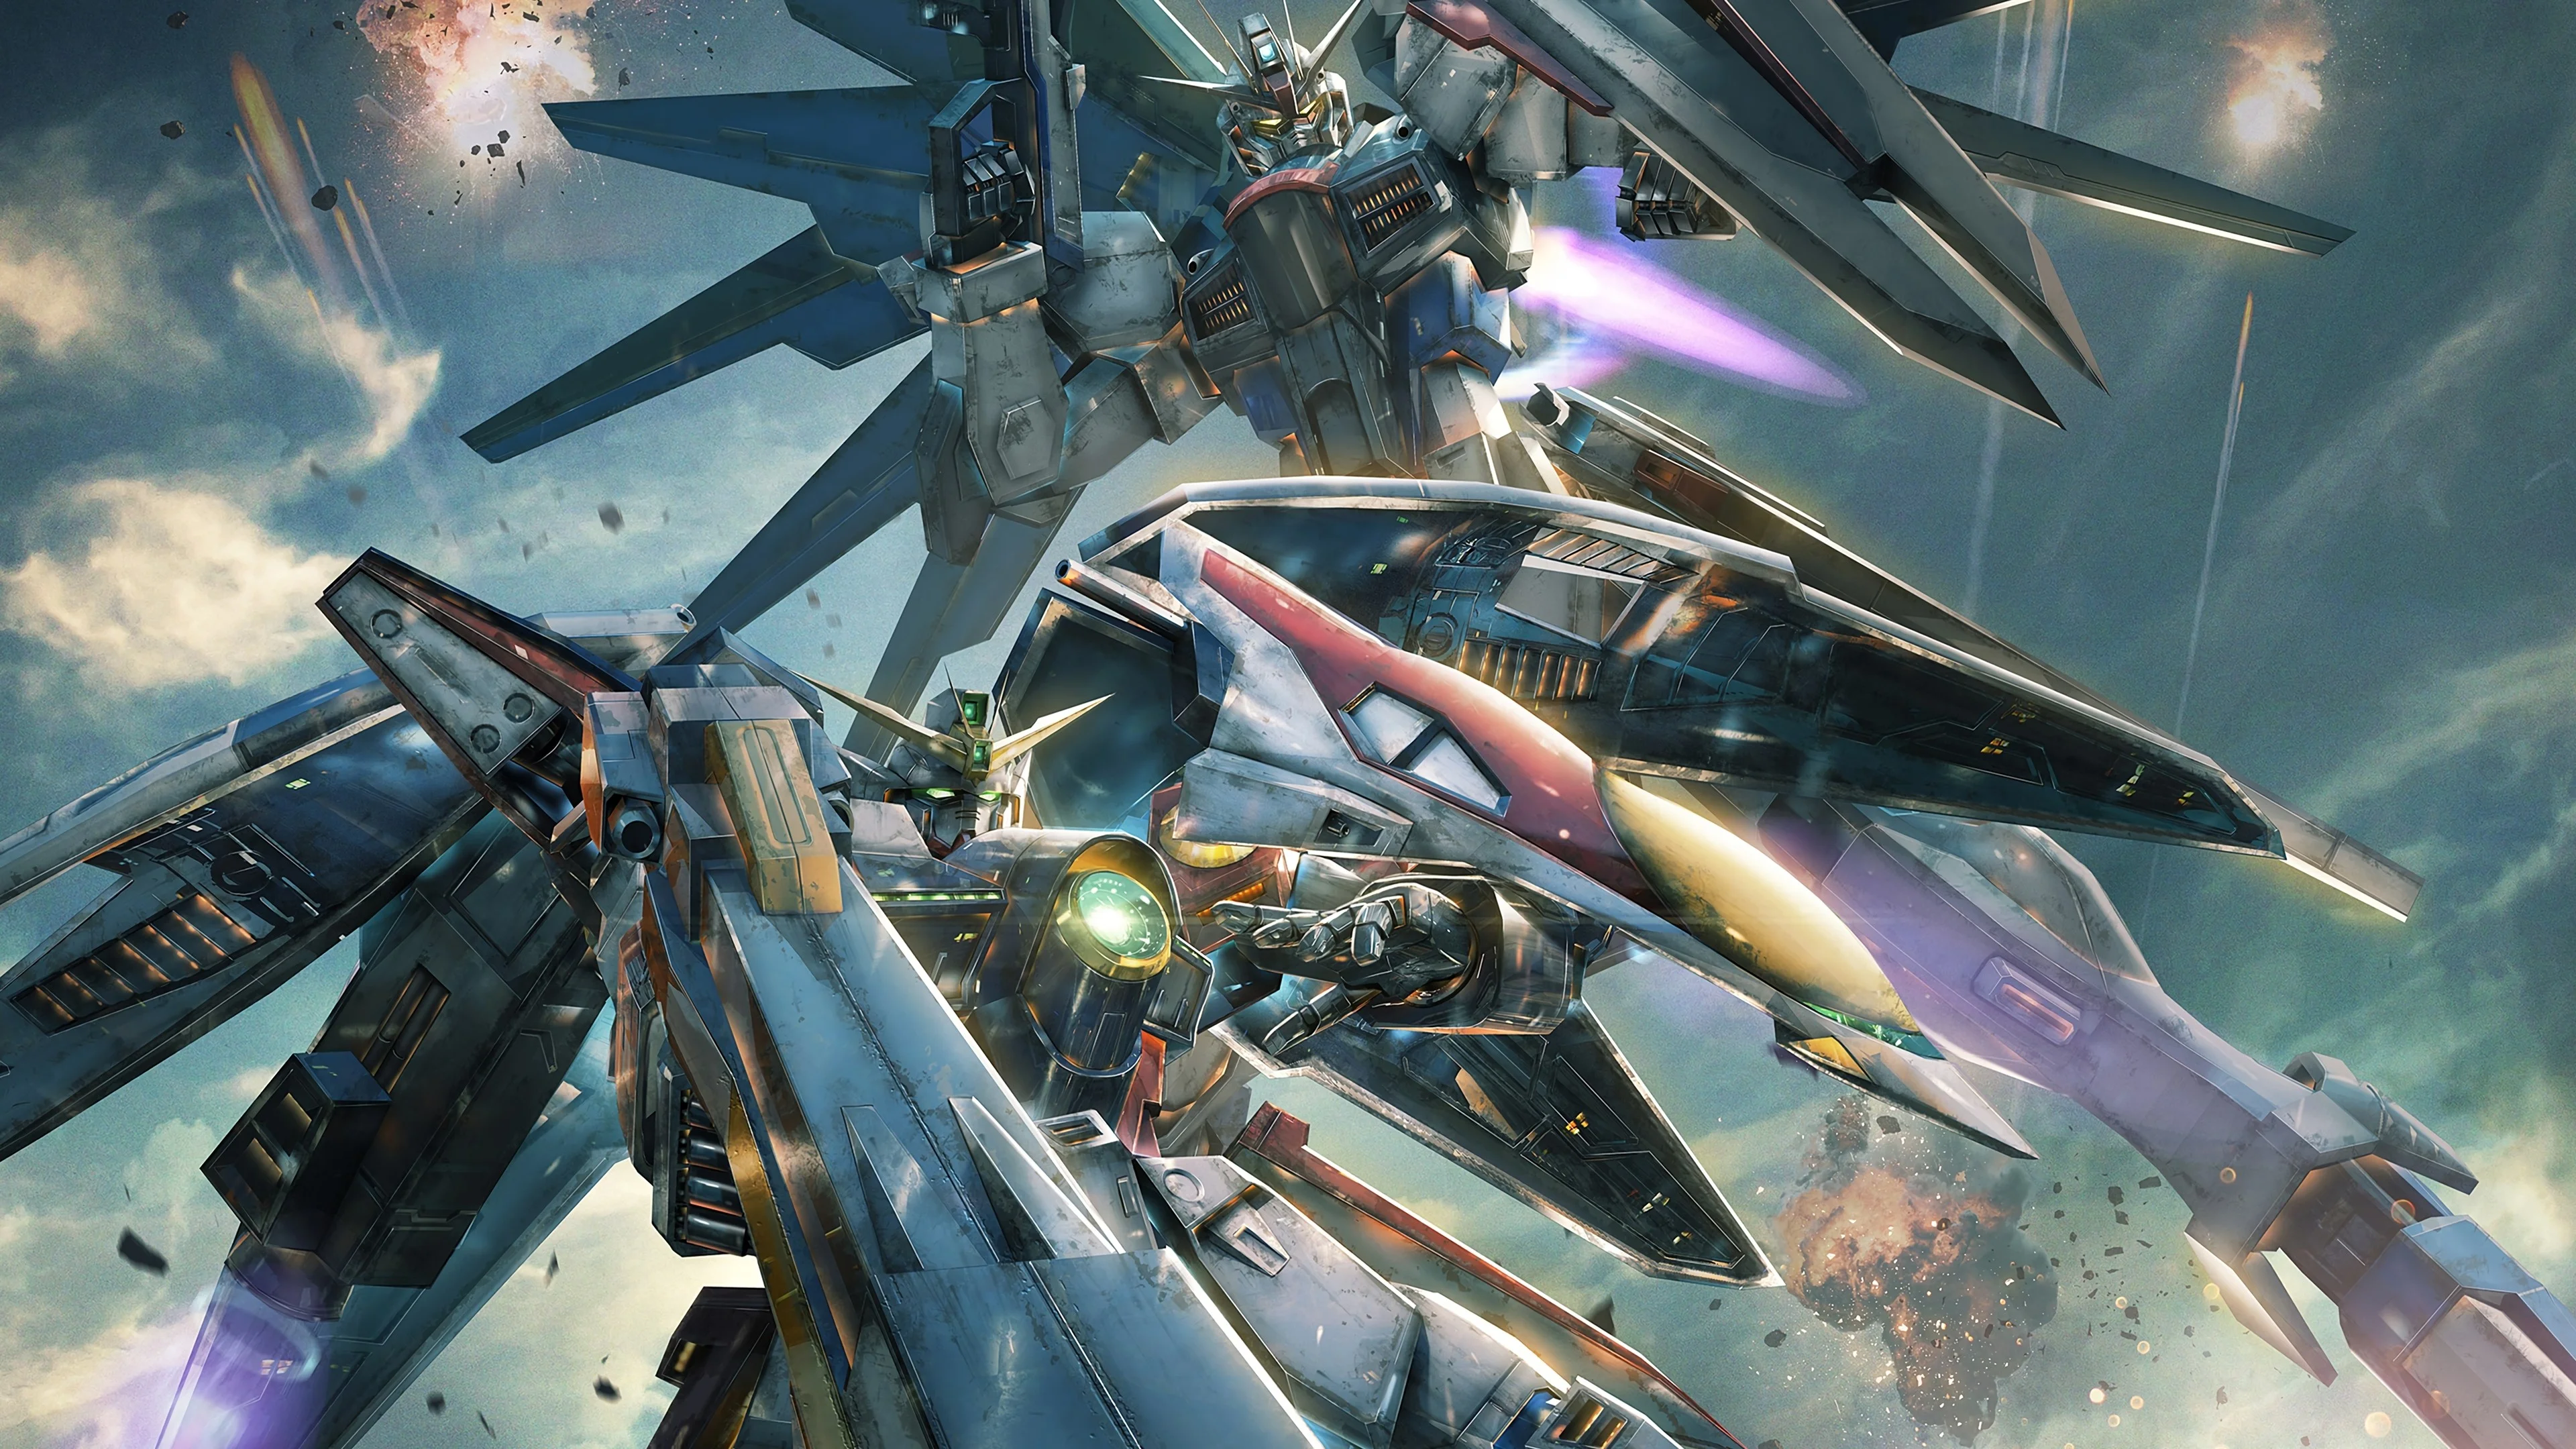 Cool Gundam Versus 4K PlayStation 4 PS4 Game wallpaper Check more at http